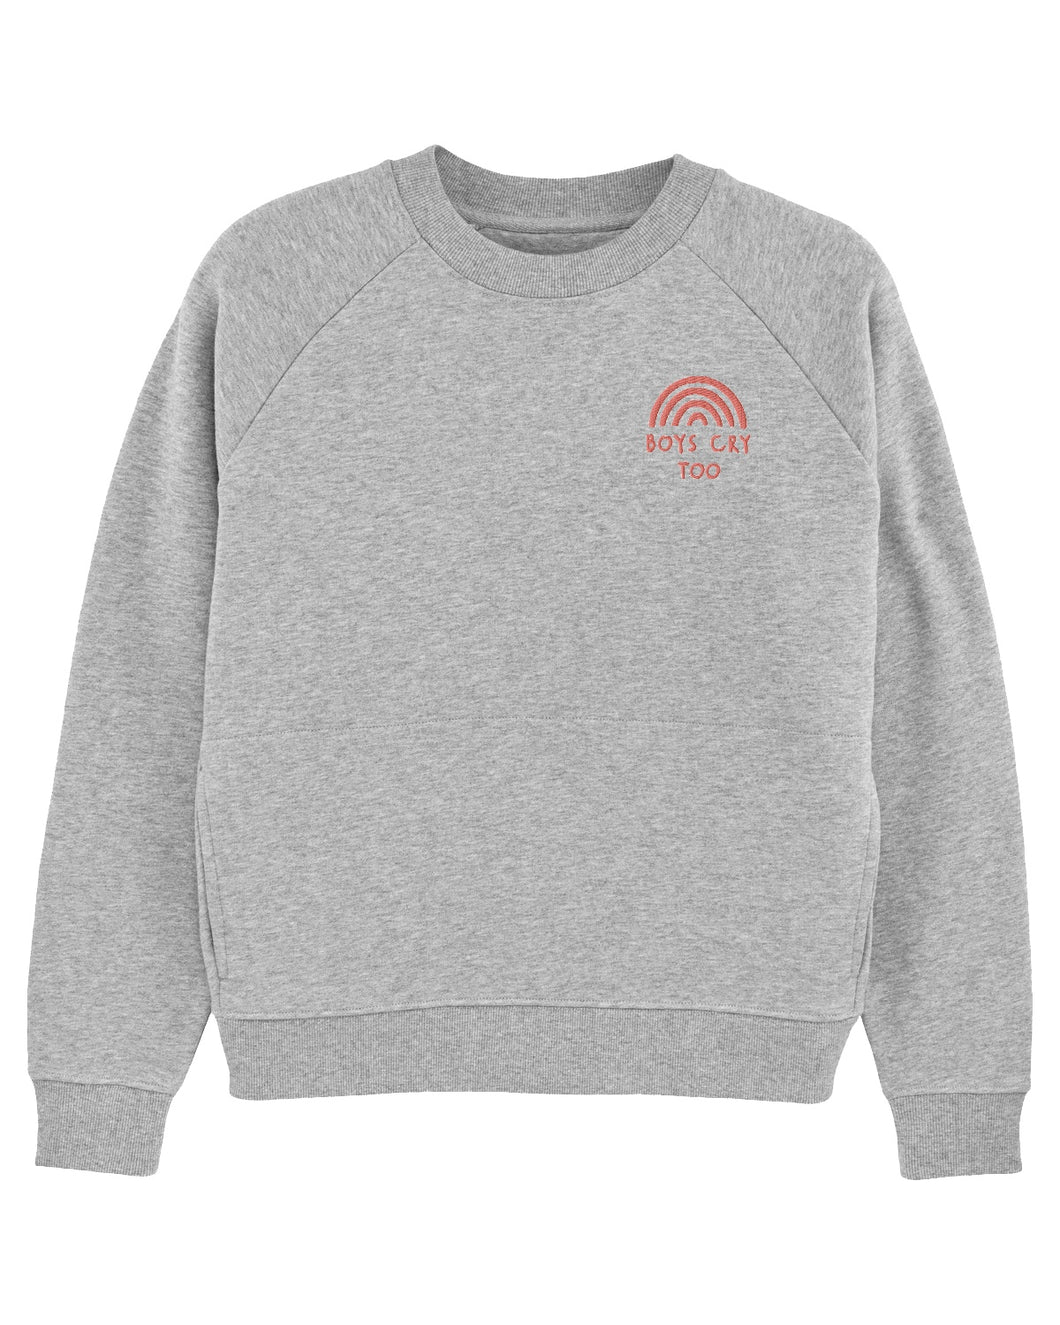 Boys Cry Too - Sweatshirt with pockets - Grey